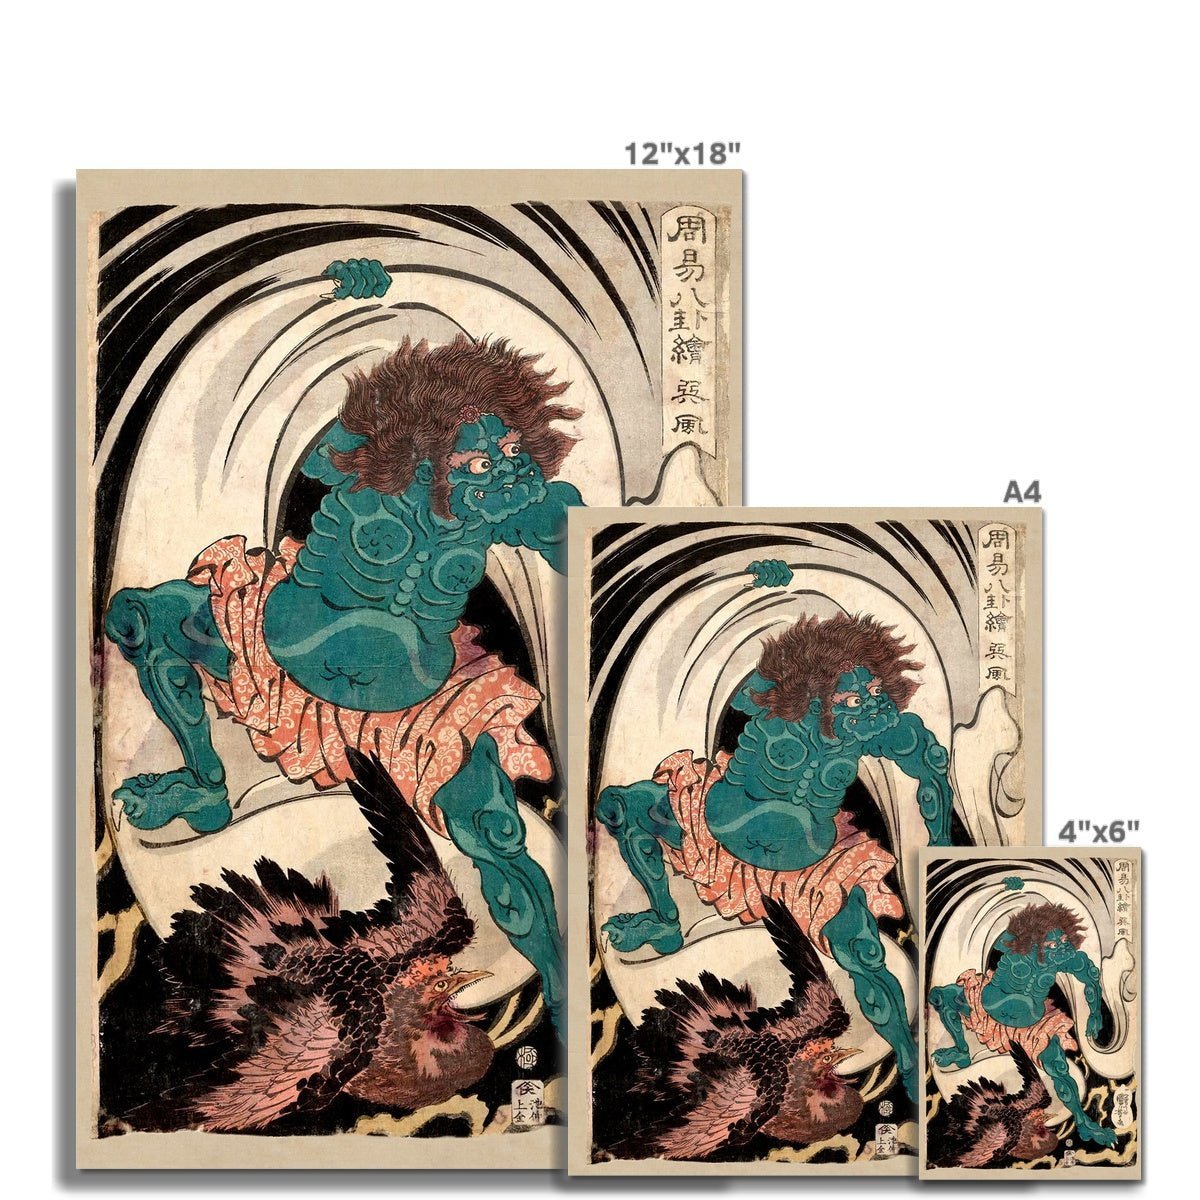 giclee The Trigram Xun or Wind by Utagawa Kuniyoshi Japanese Kawaii Supernatural Occult Yokai Ukiyo-e Woodblock Vintage Fine Art Print